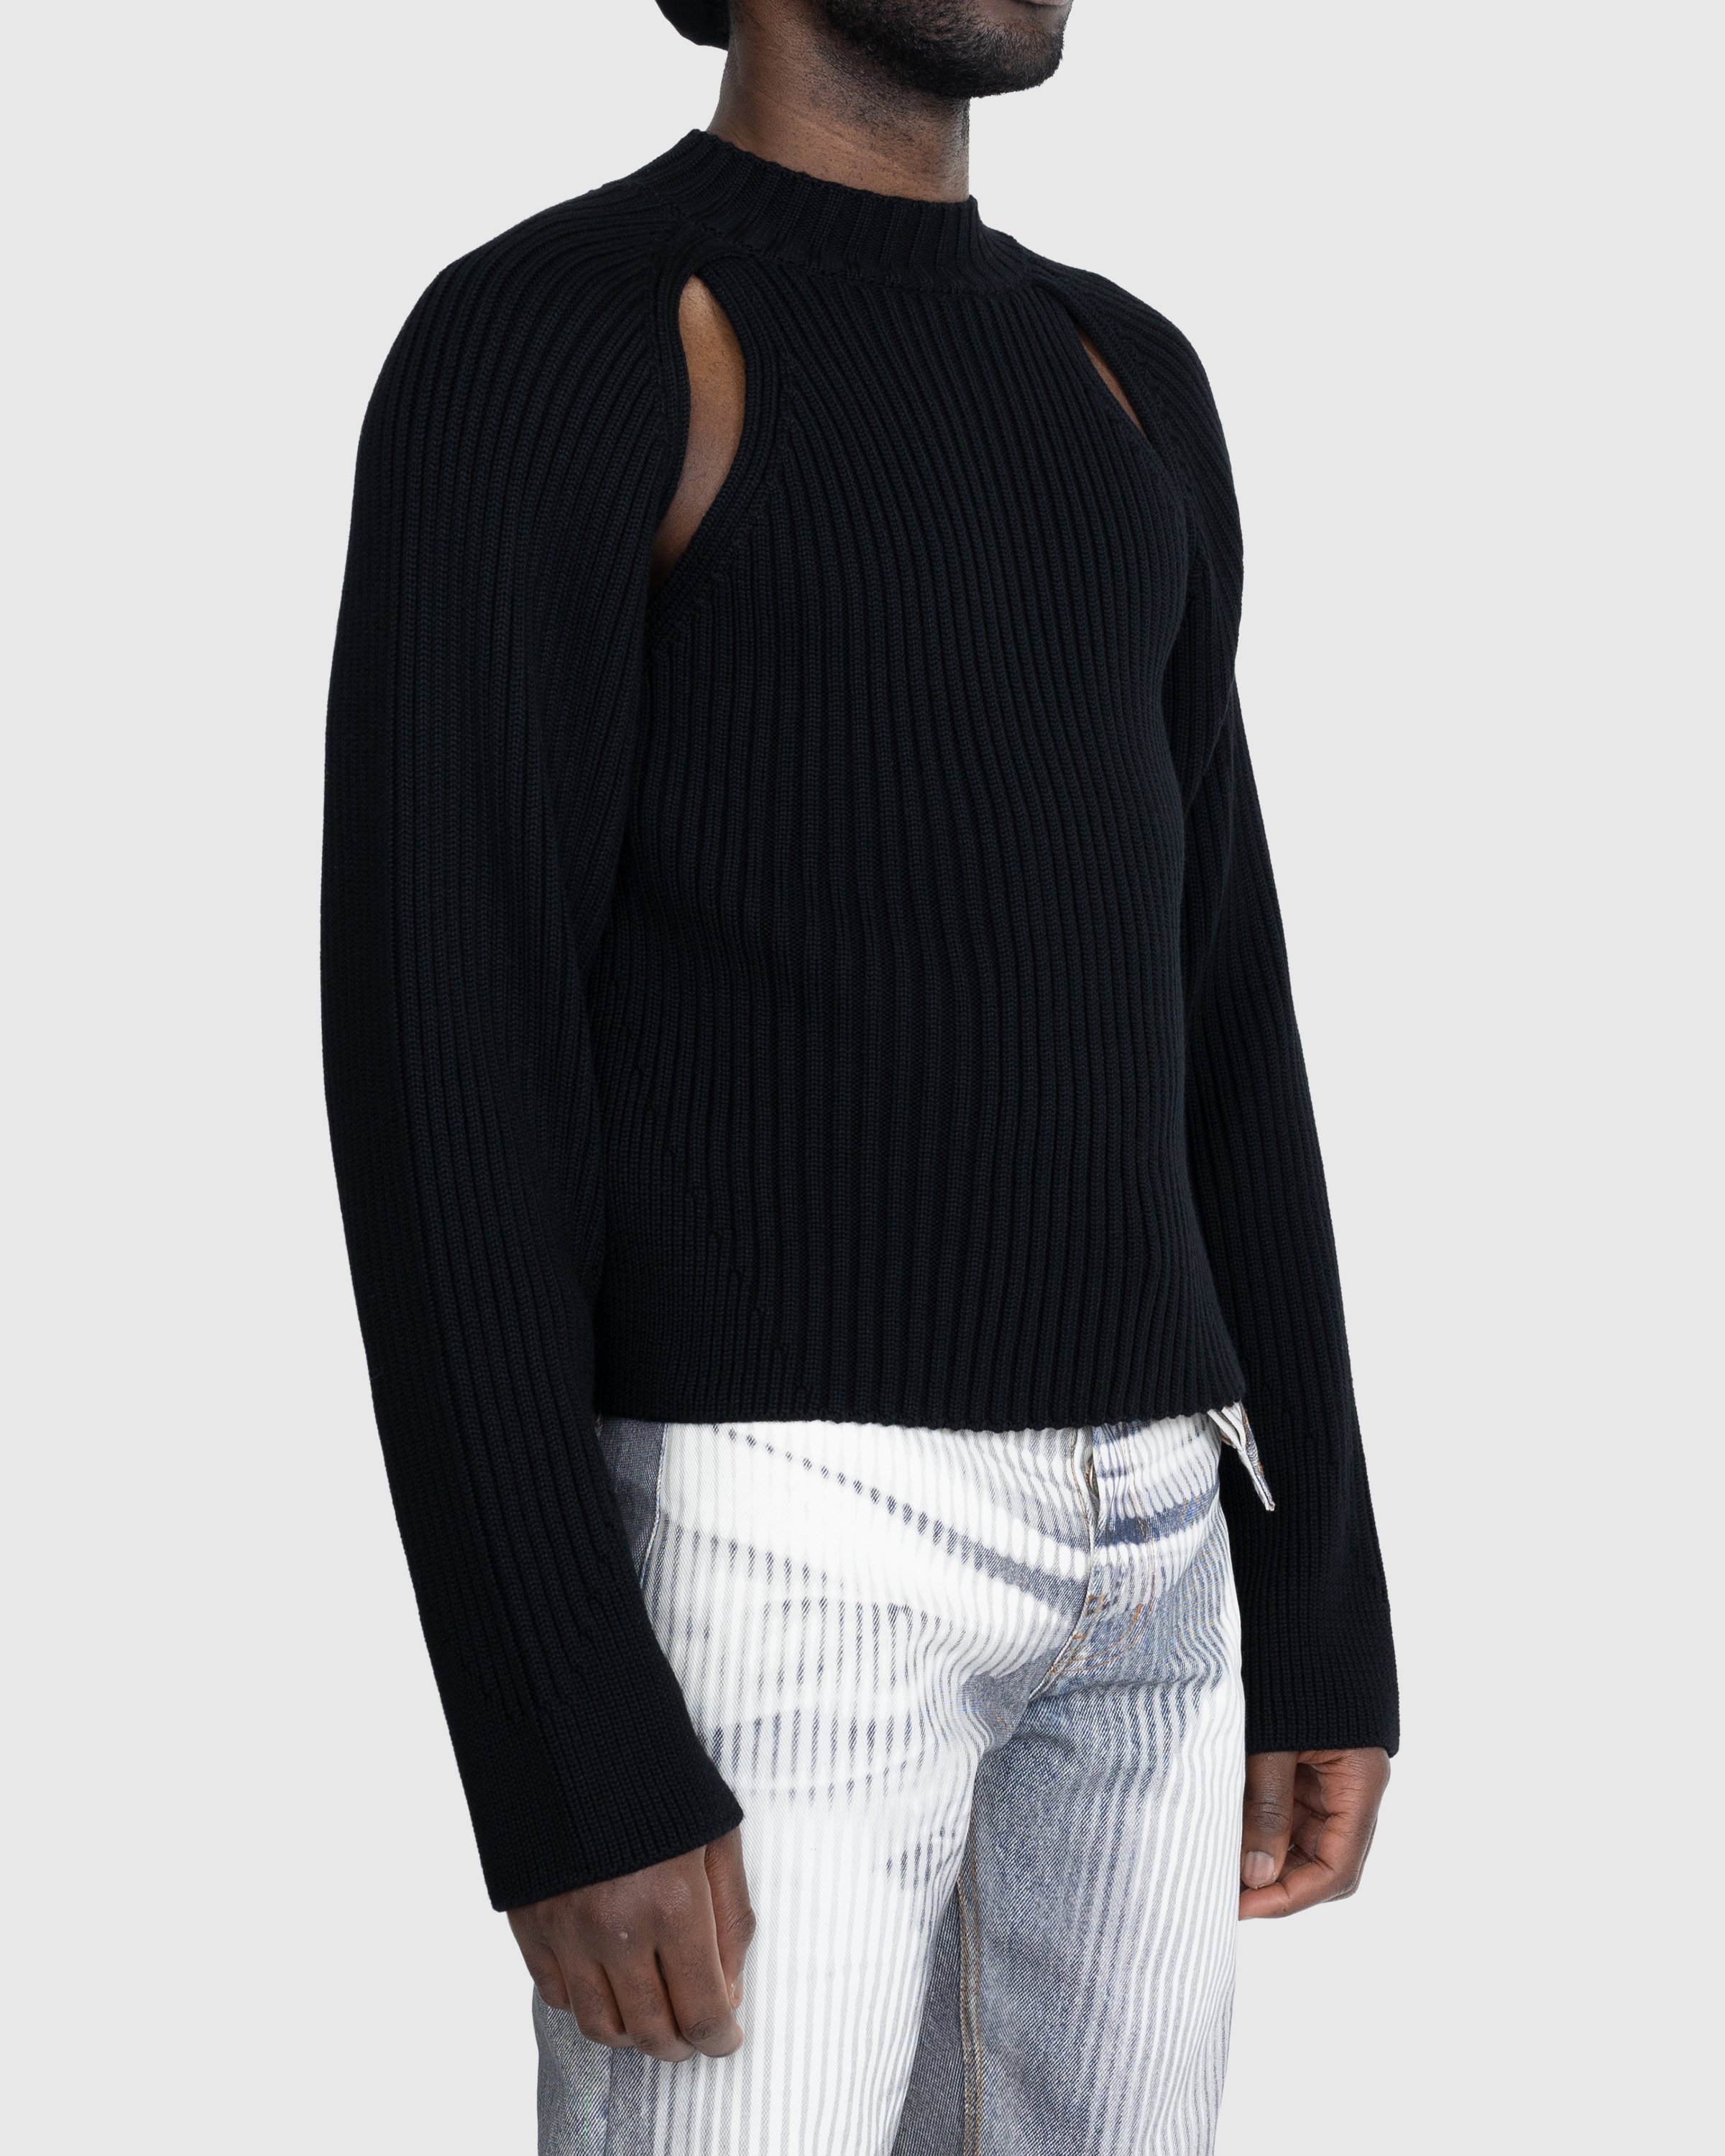 Jean Paul Gaultier - Oversized Sweater - Clothing - Black - Image 4